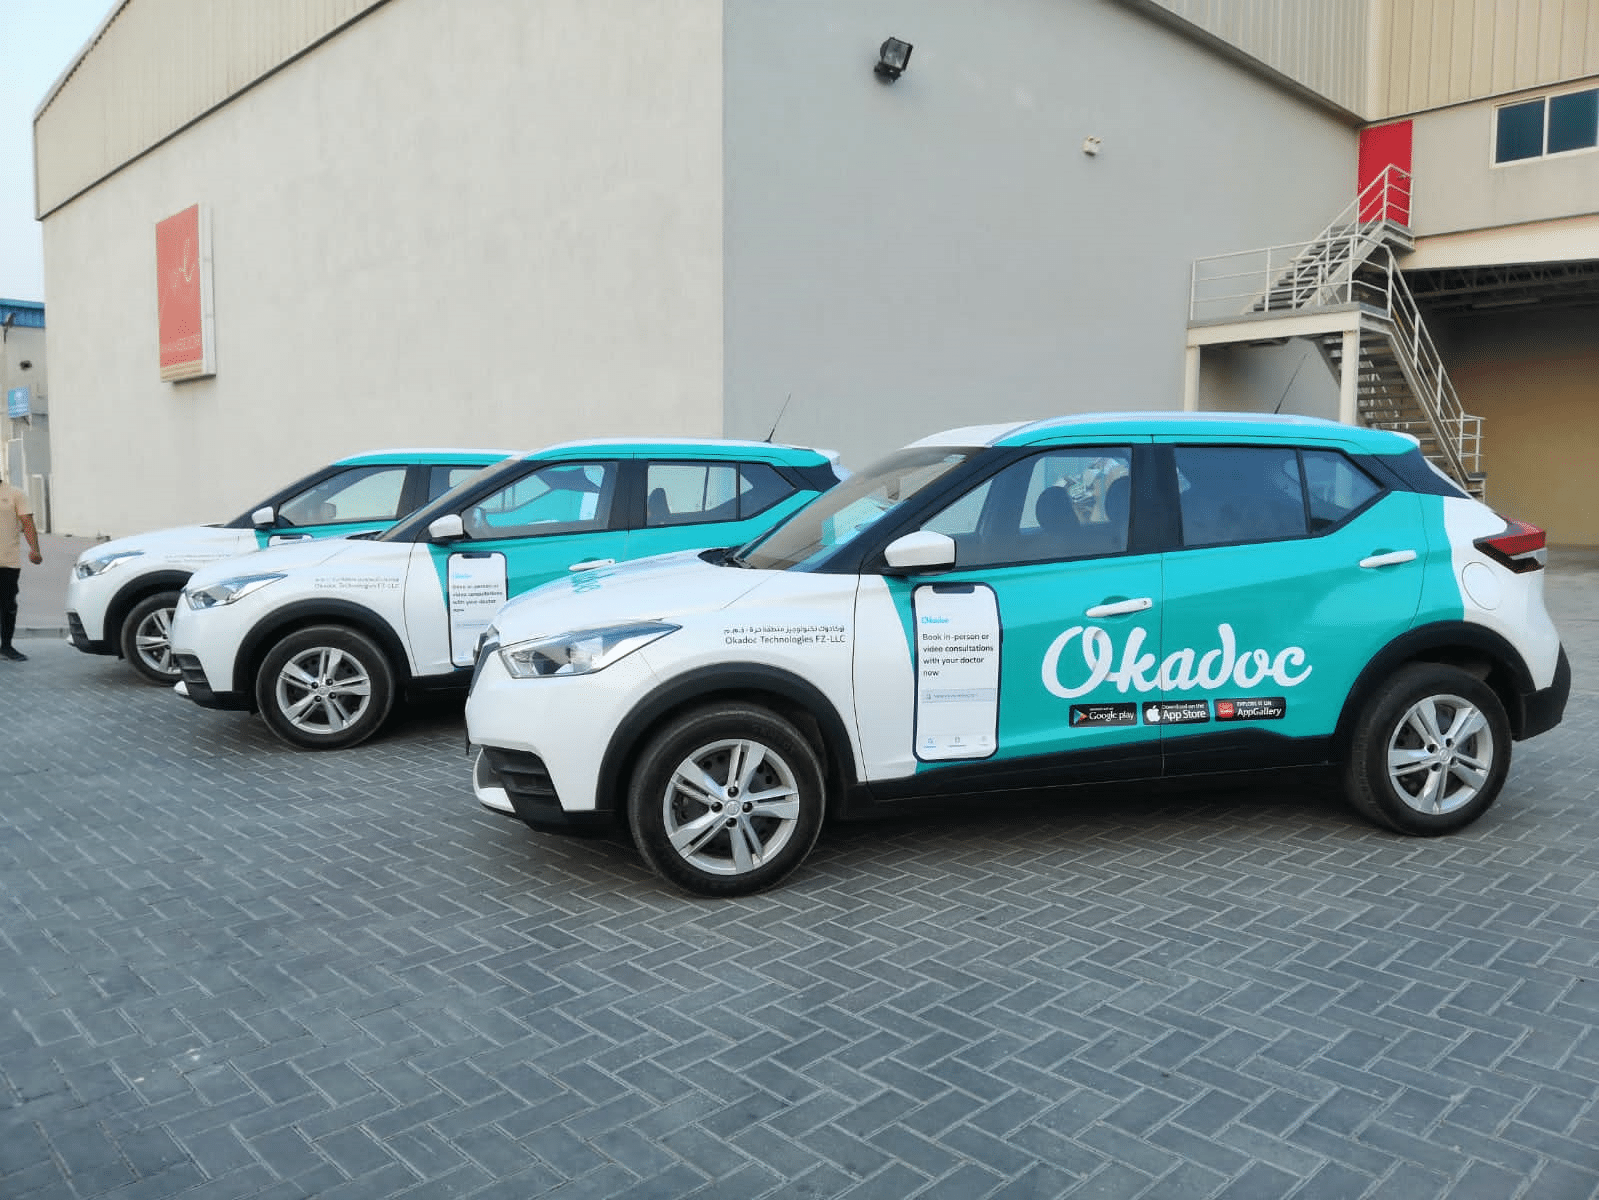 Vehicle Advertising In Dubai: 7 Mistakes To Avoid - Printzone - No.1 Vehicle Branding In Dubai & Signage